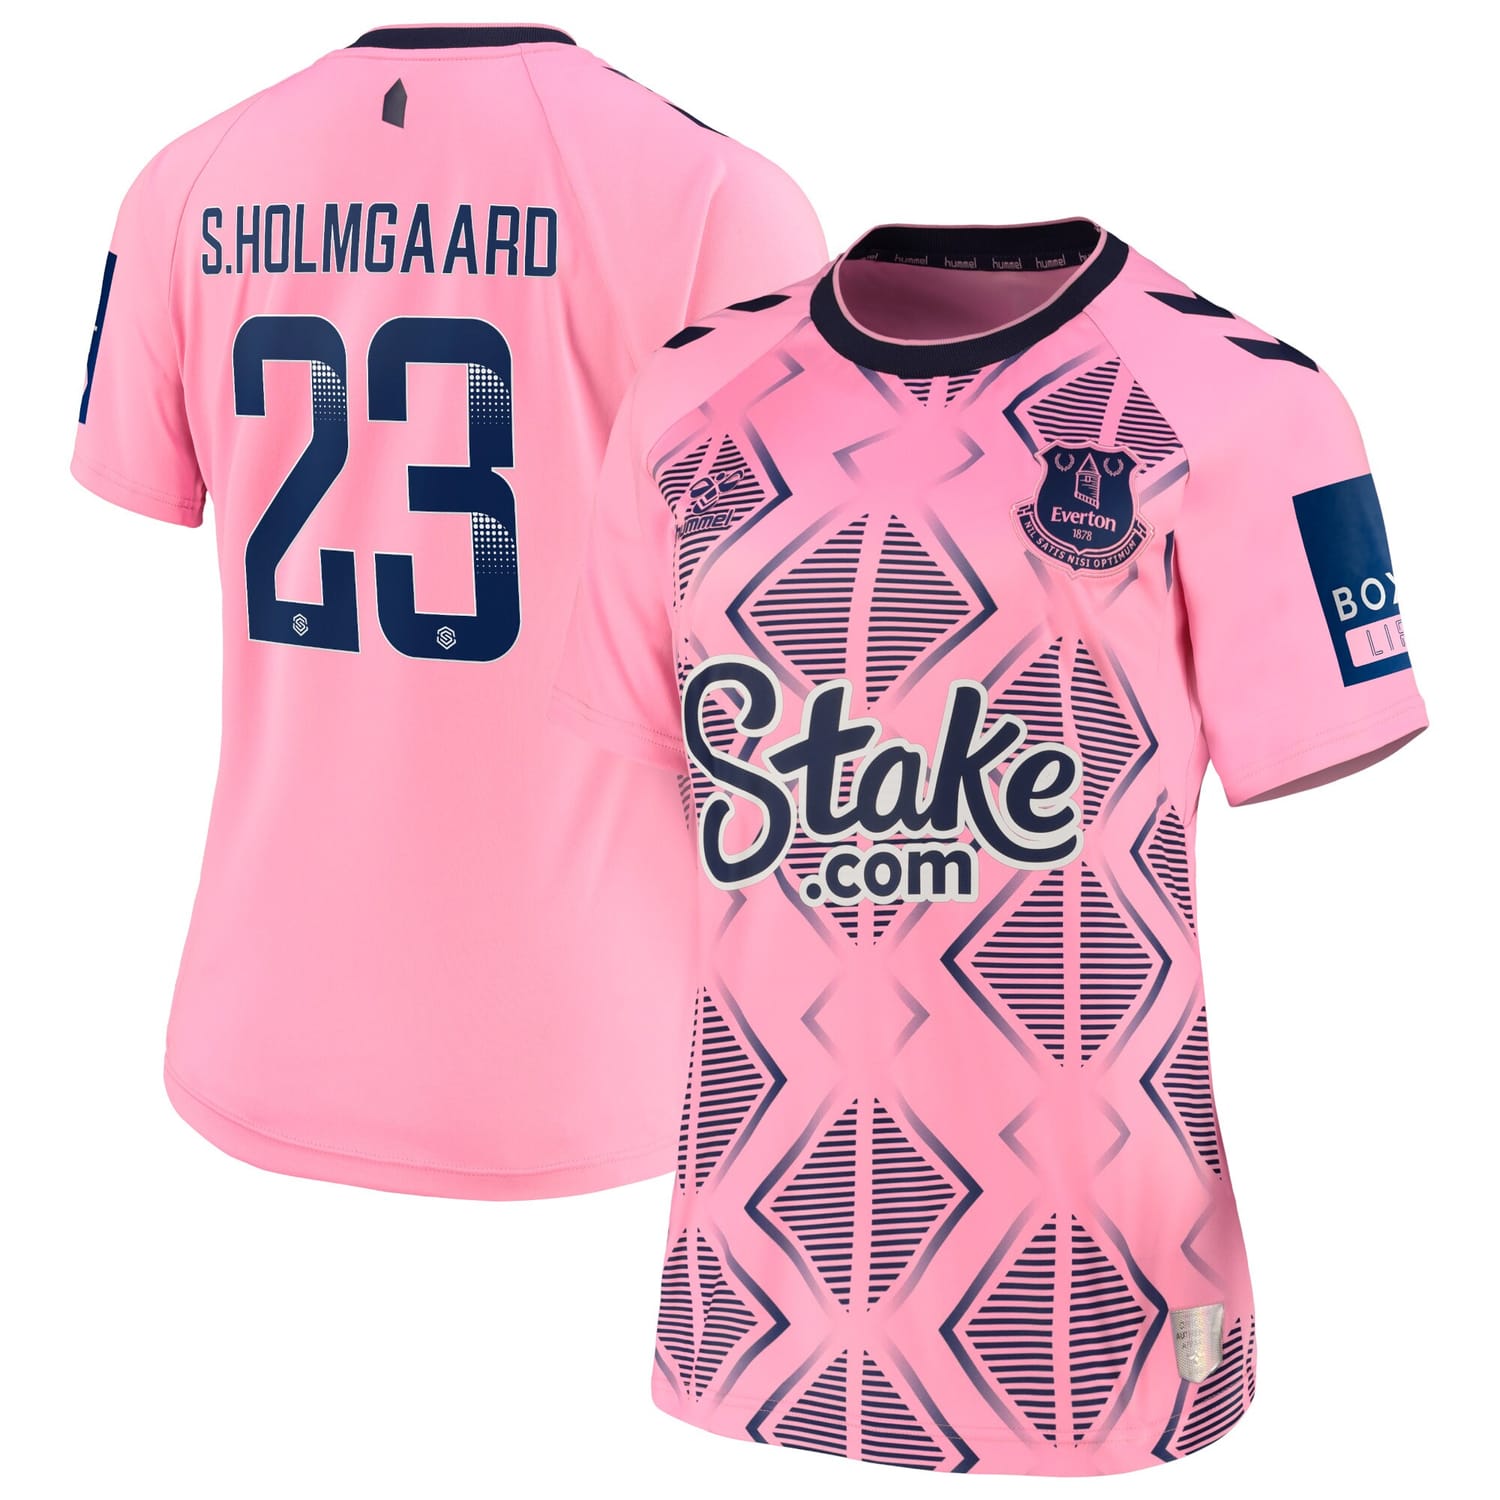 Premier League Everton Away Jersey Shirt 2022-23 player Sara Holmgaard 23 printing for Women